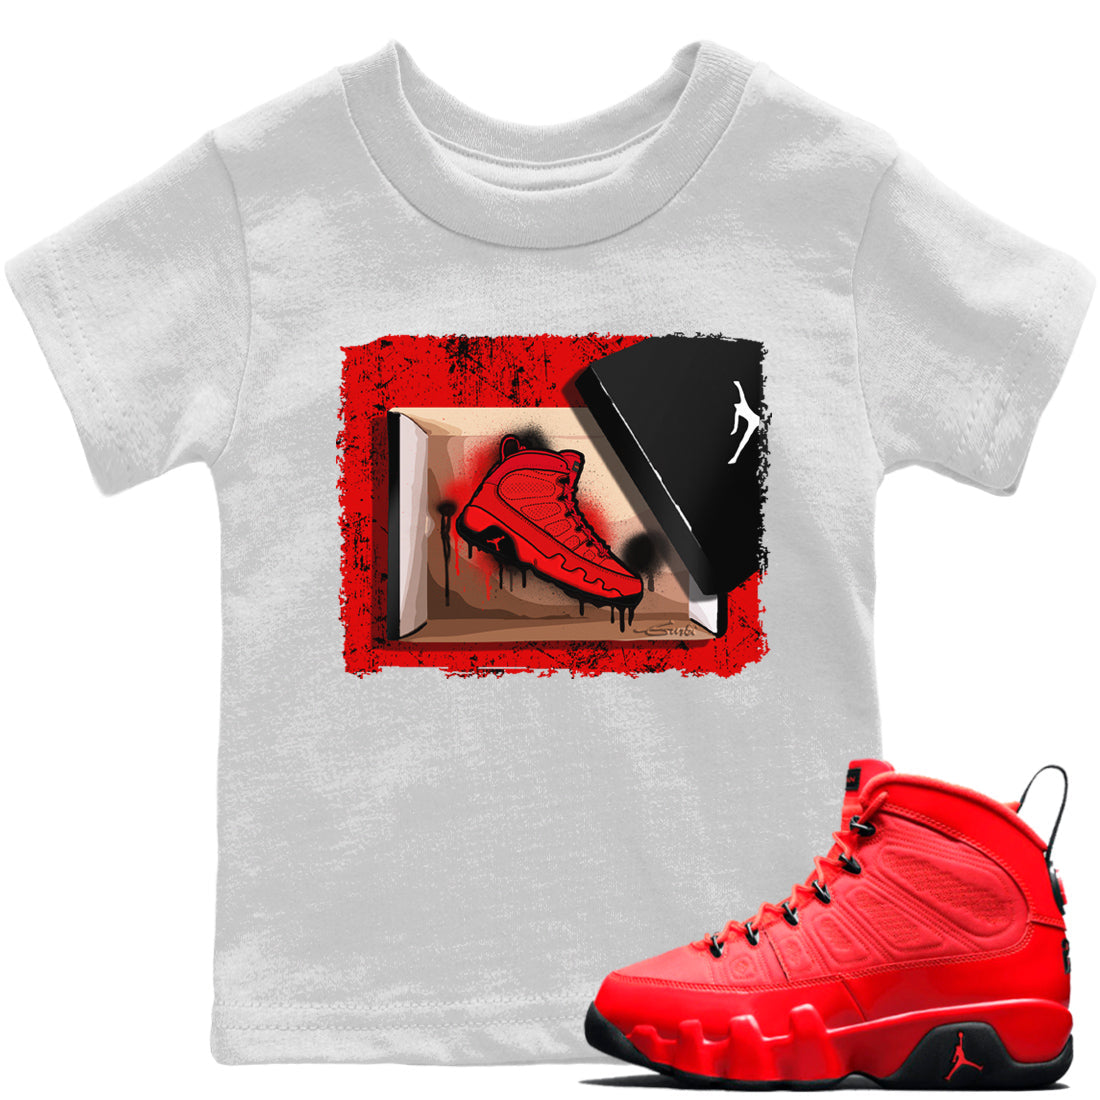 Jordan 9 Chile Red Sneaker Match Tees New Kicks Sneaker Tees Jordan 9 Chile Red Sneaker Release Tees Kids Shirts